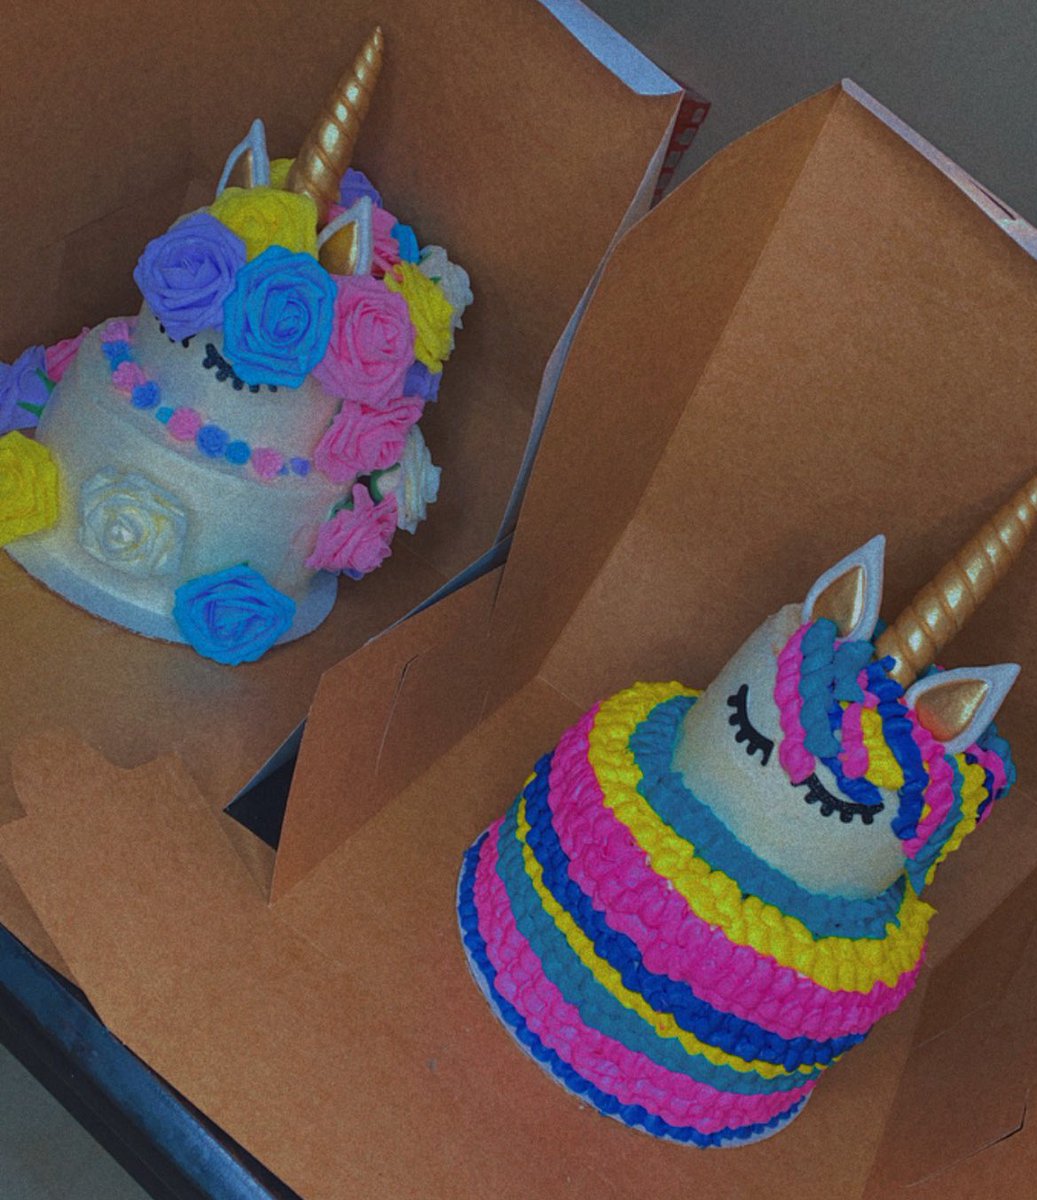 Unicorn Cakes 🦄💛 @scookware_llc #charlestonsc #unicorncake